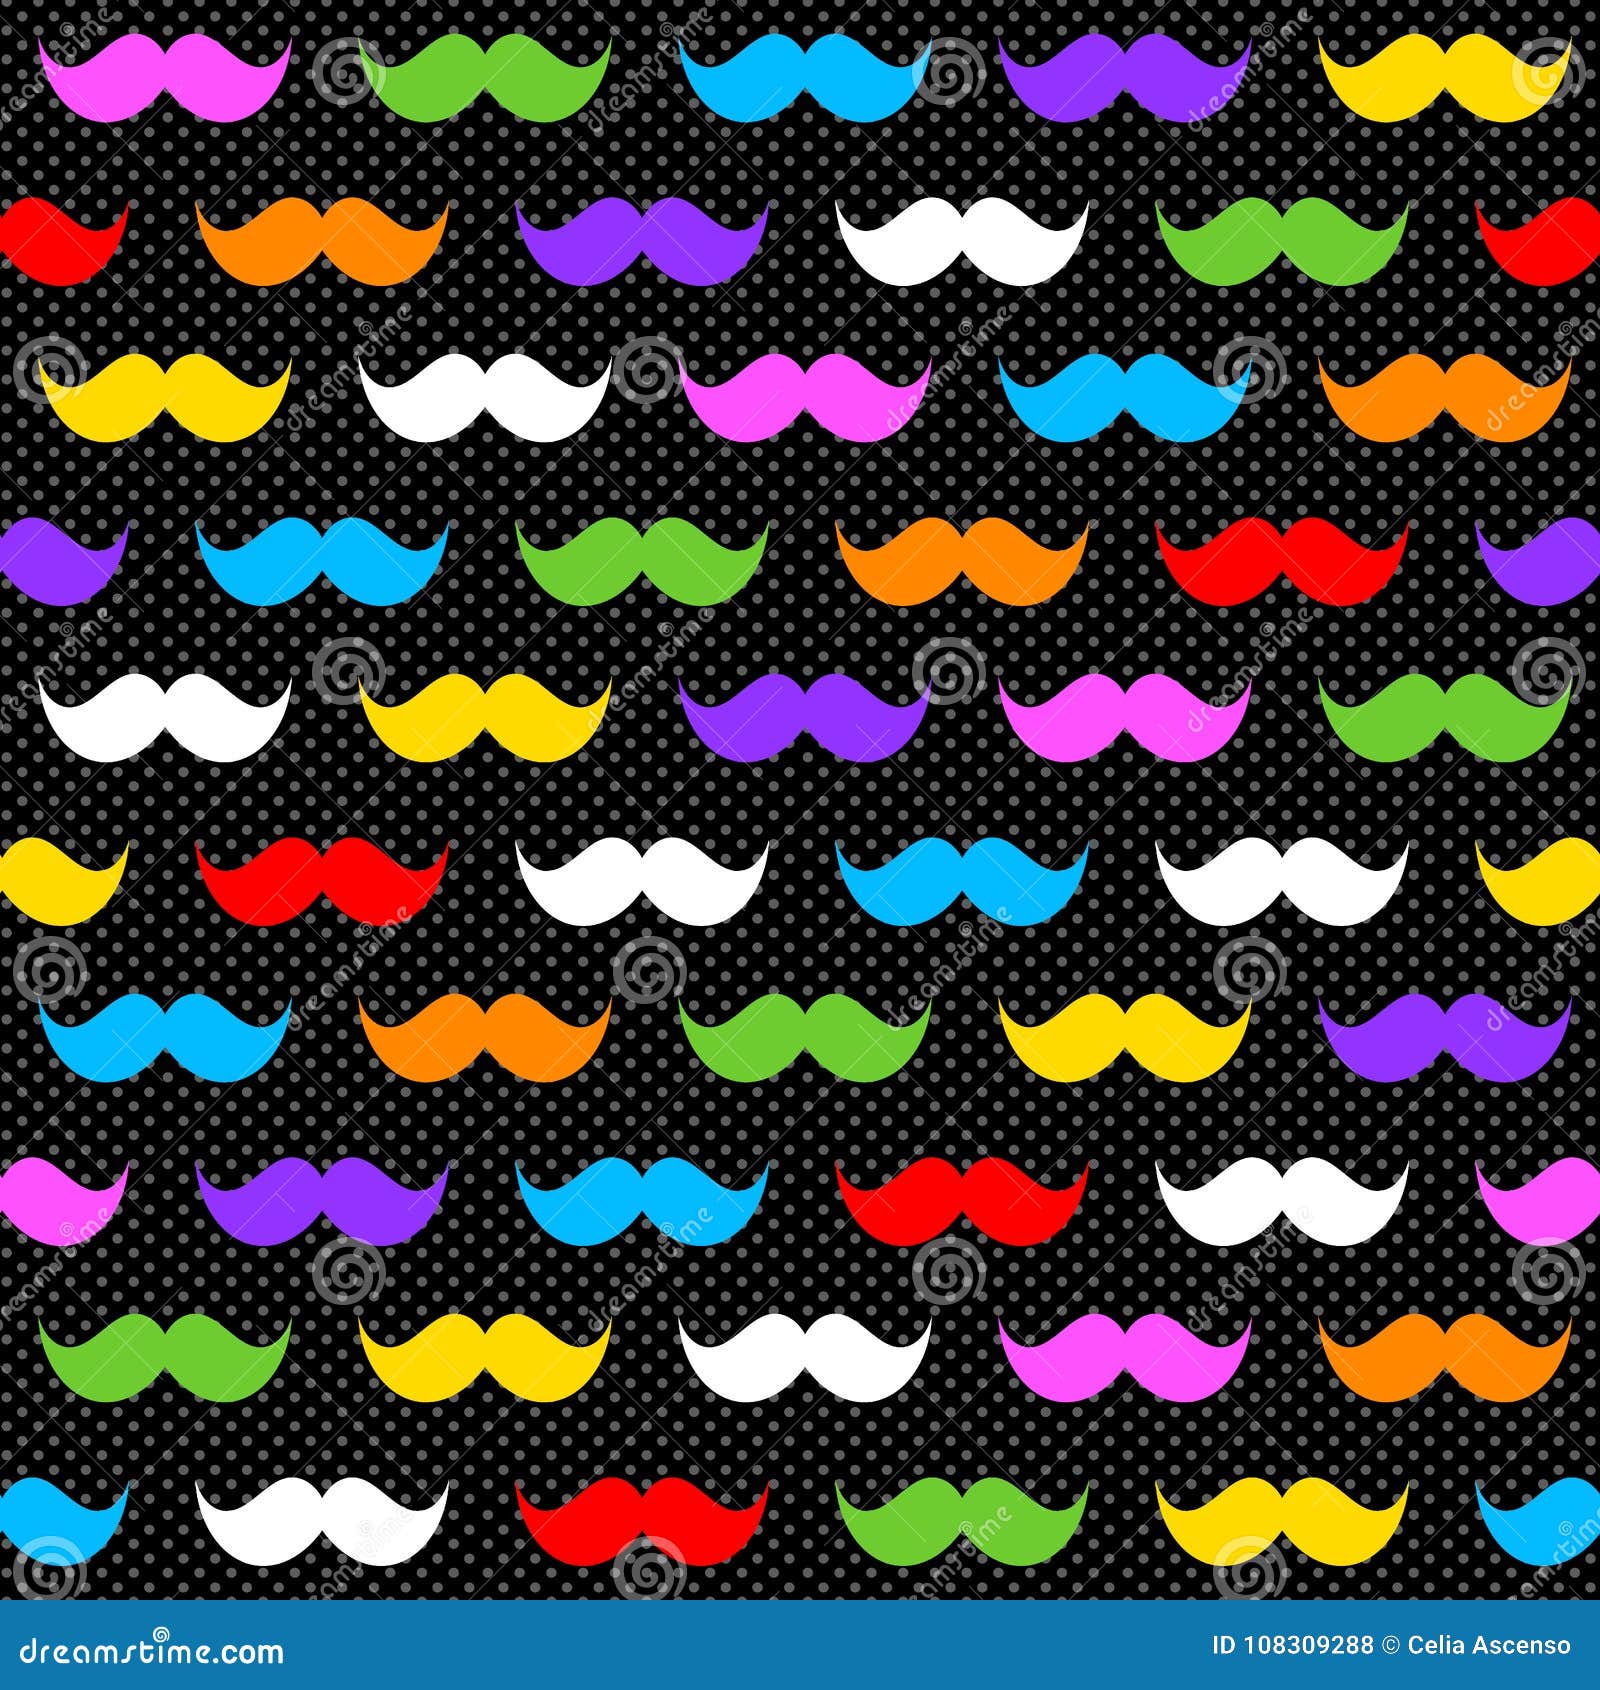 rainbow moustaches on black seamless background